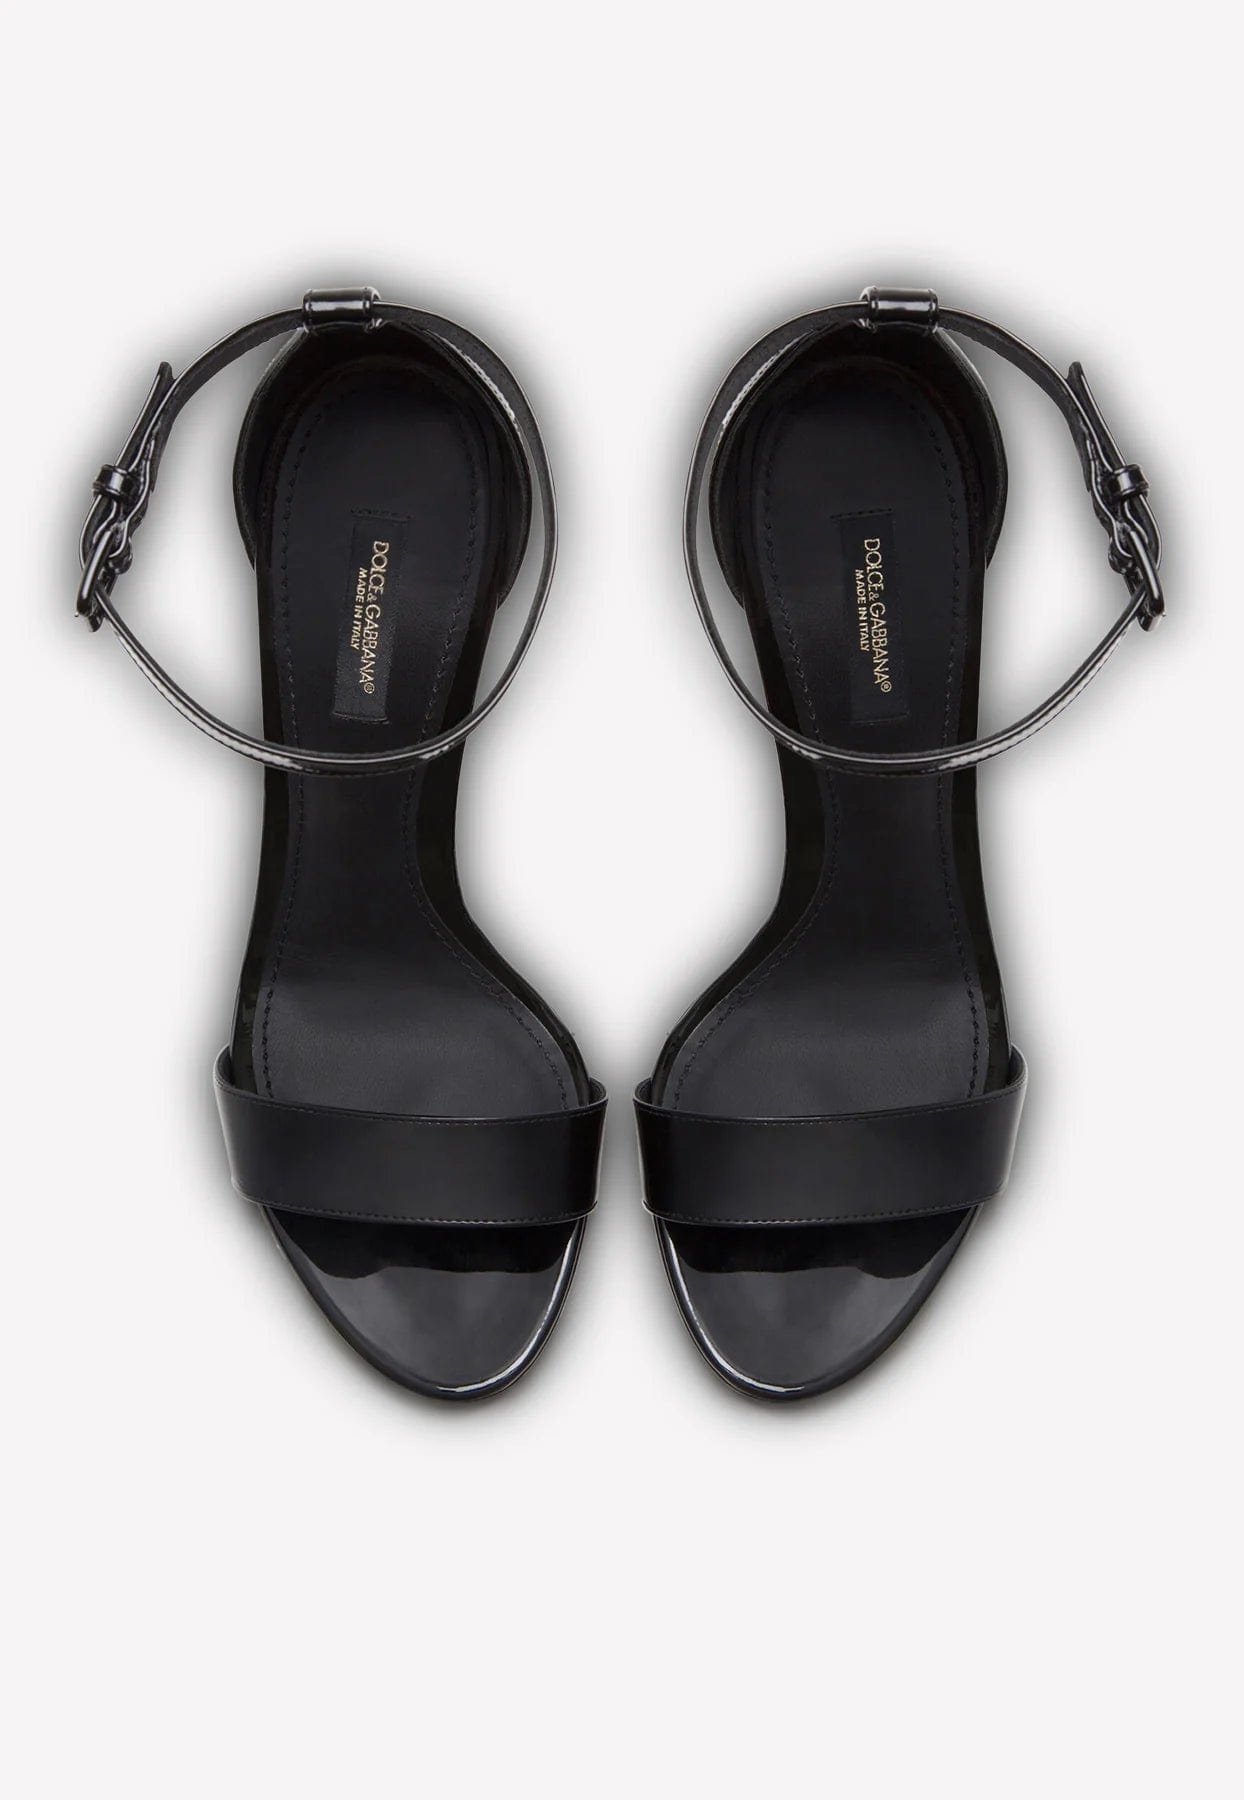 Dolce & Gabbana Keira 105 Sandals